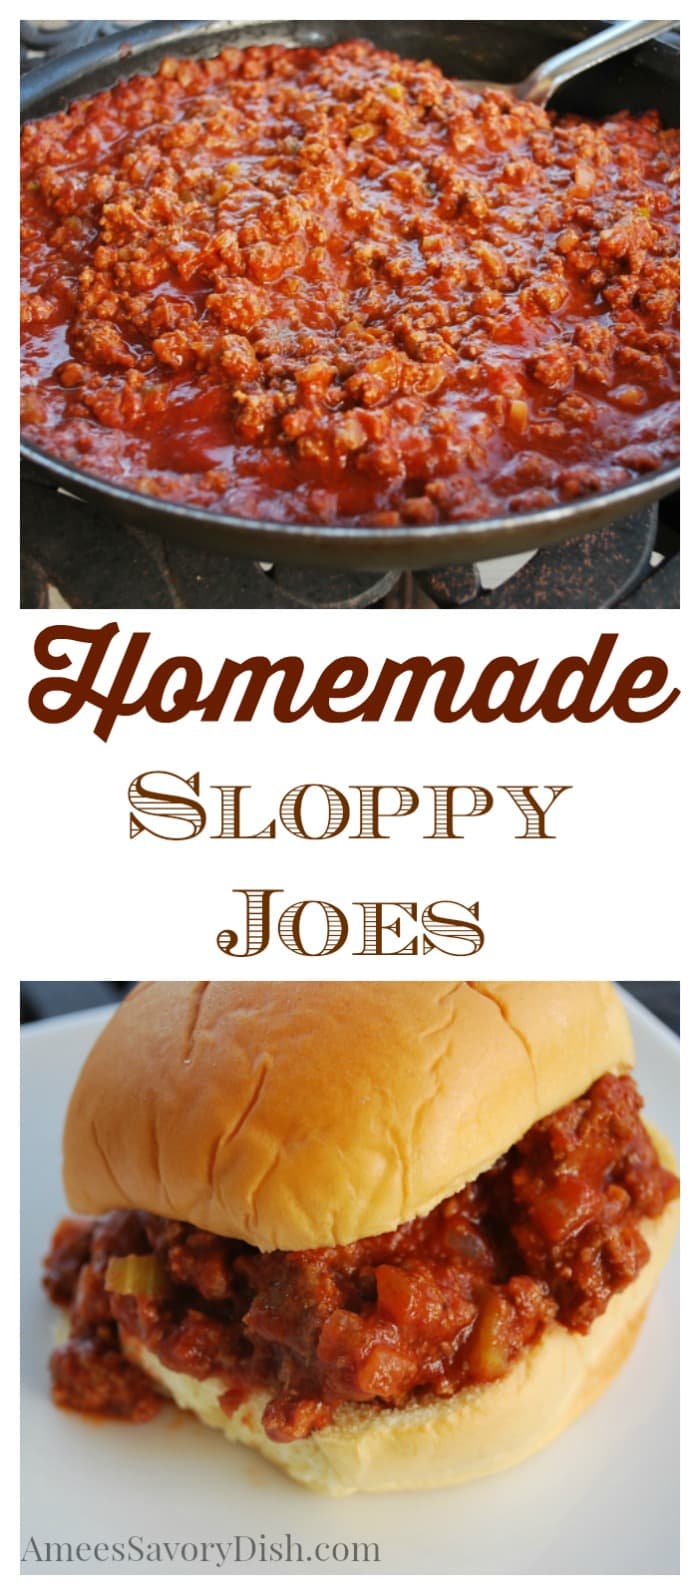 Homemade Sloppy Joes recipe- Amee's Savory Dish